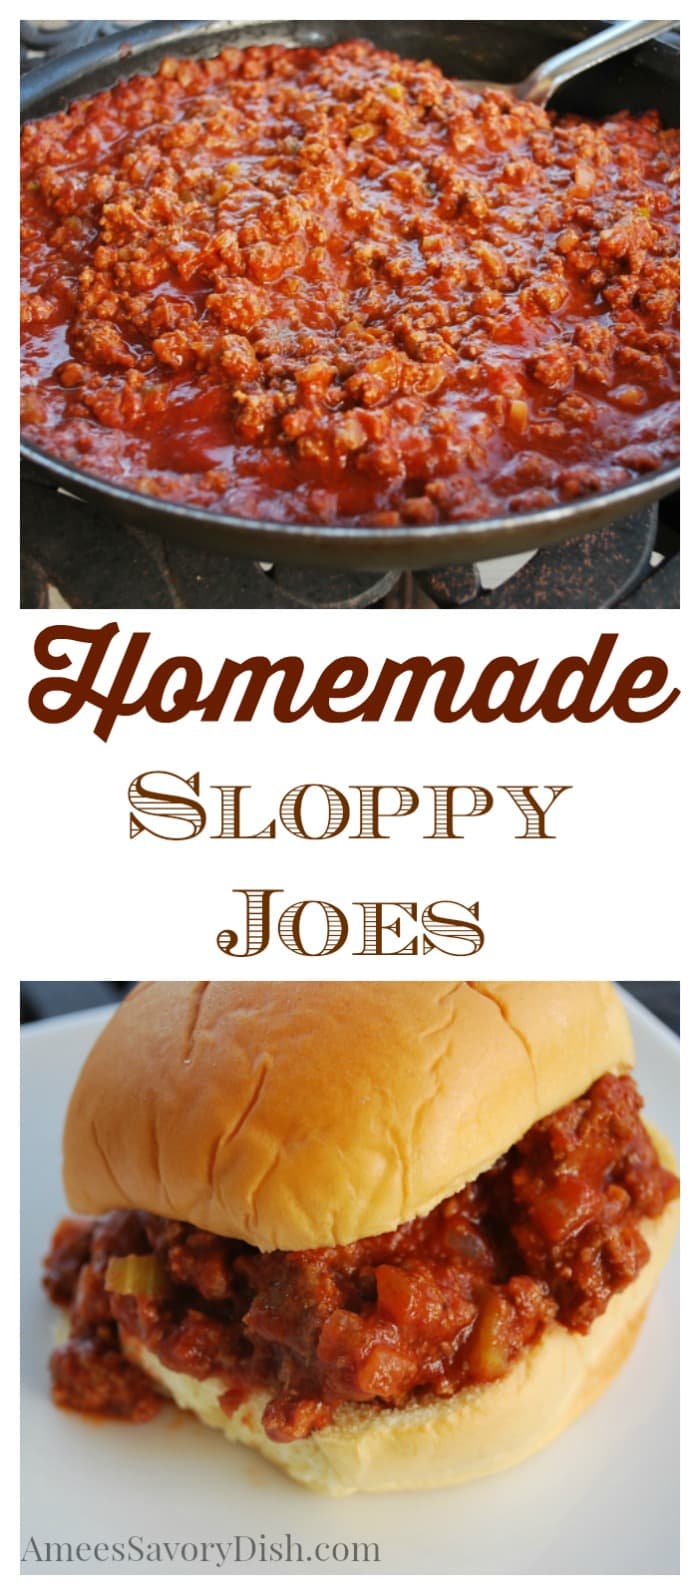 Homemade Sloppy Joes recipe- Amee's Savory Dish